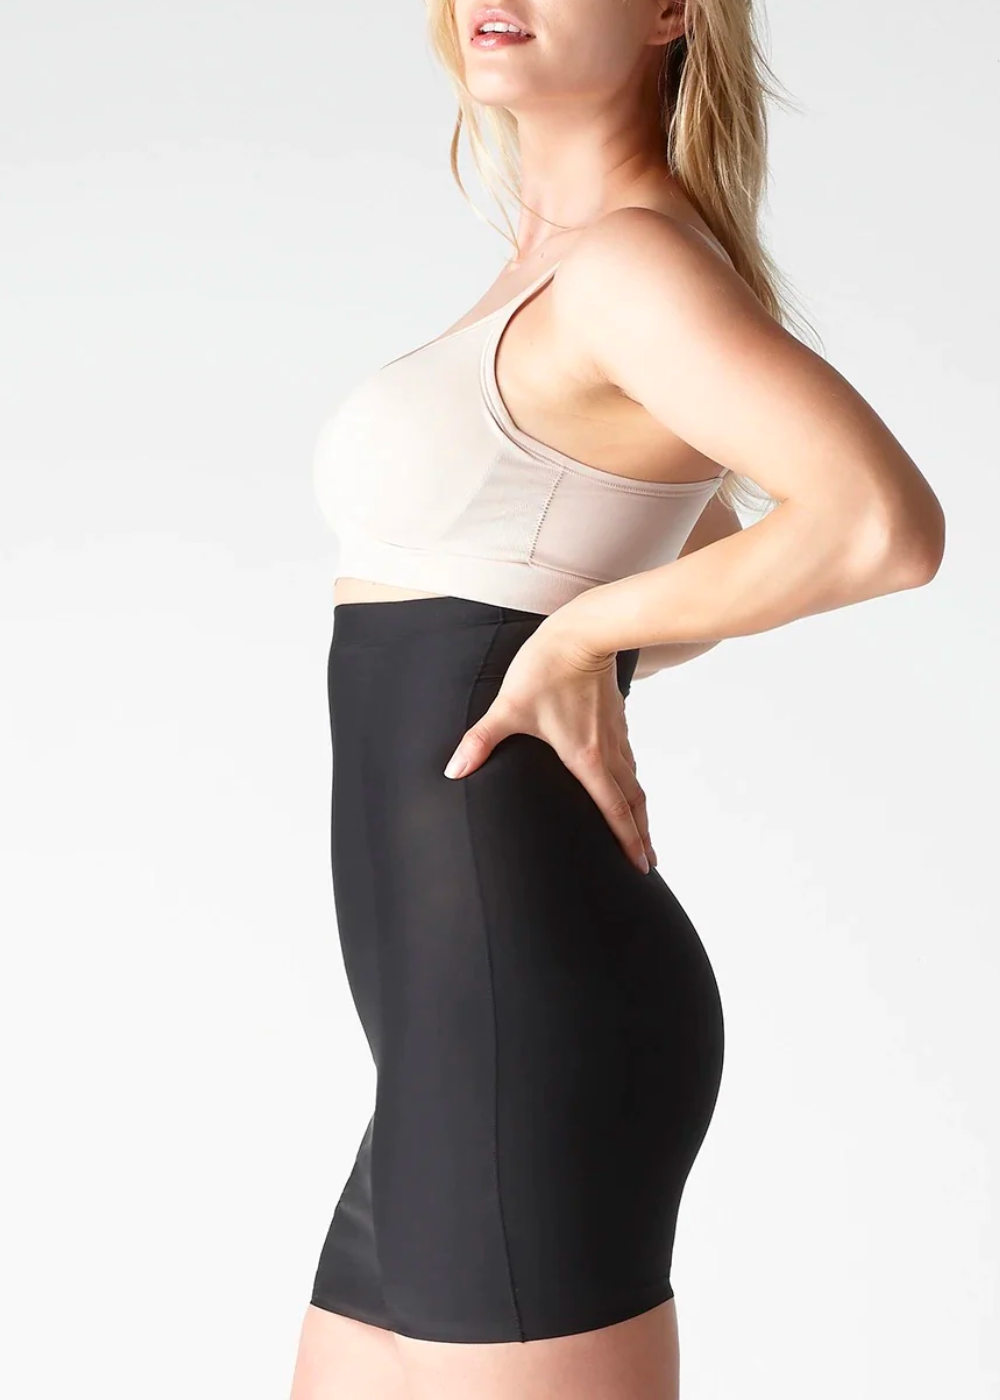 Hidden Curves Firm Shaping High Waist Skirt Slip from Yummie in Black  - 1